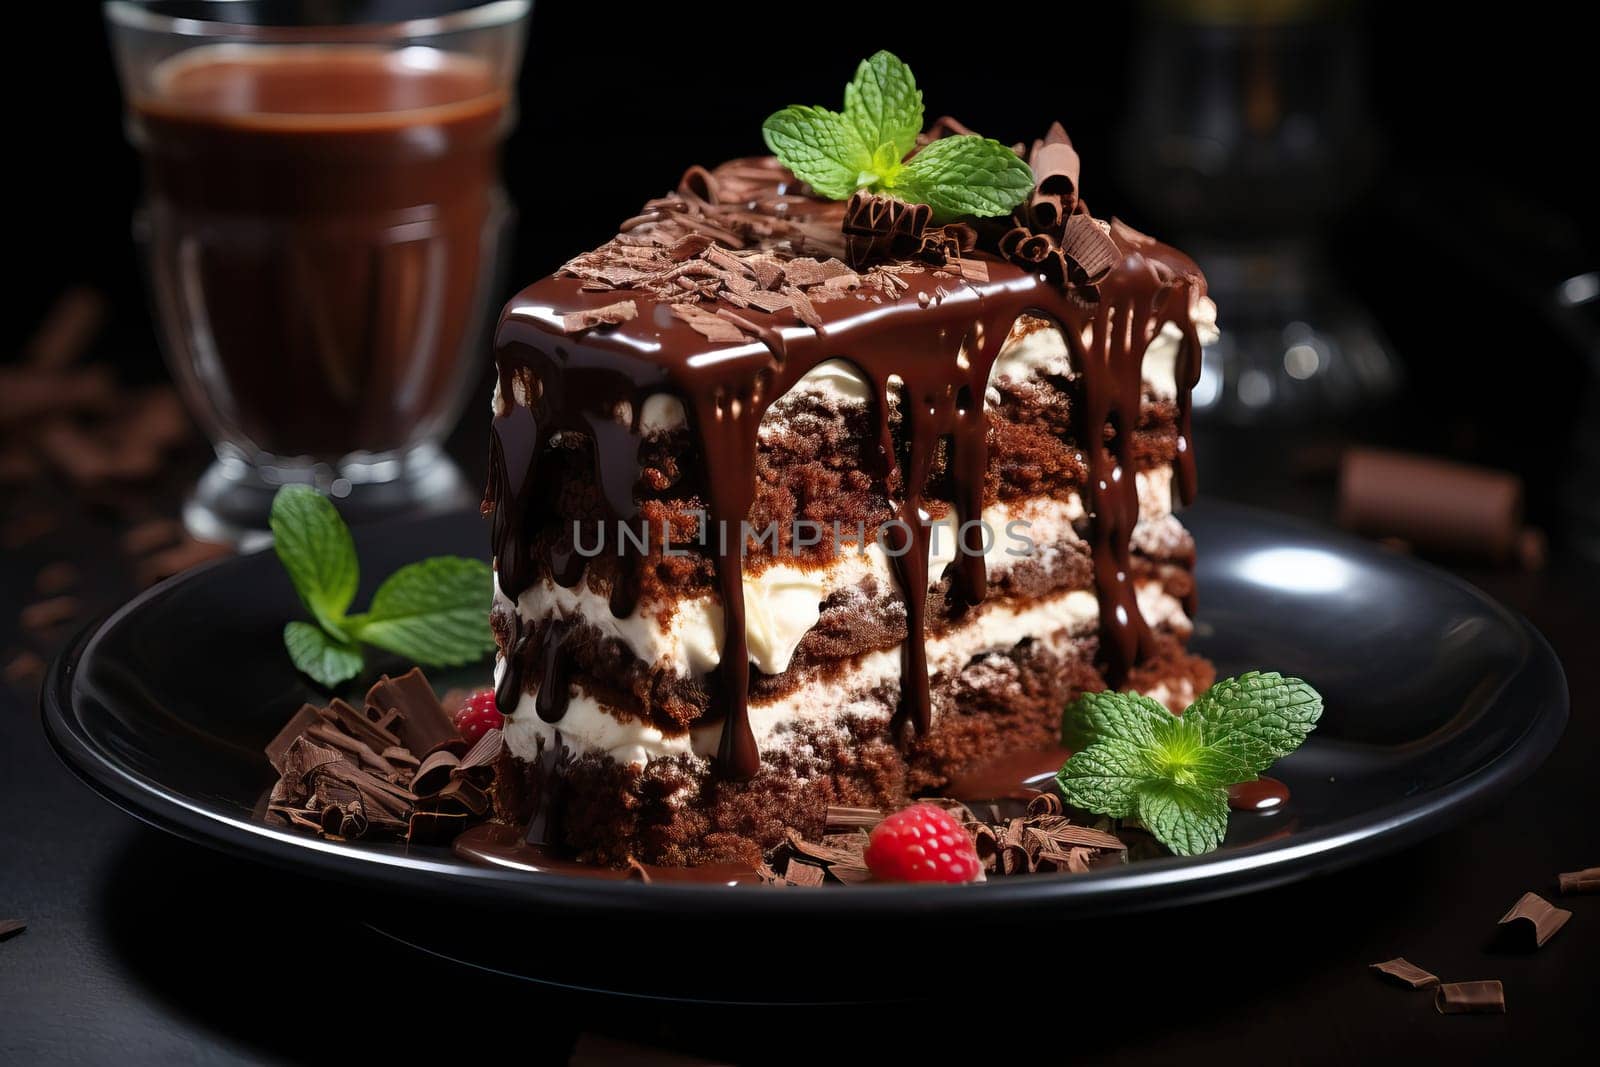 Plate with slice of tasty homemade chocolate cake on table by Niko_Cingaryuk